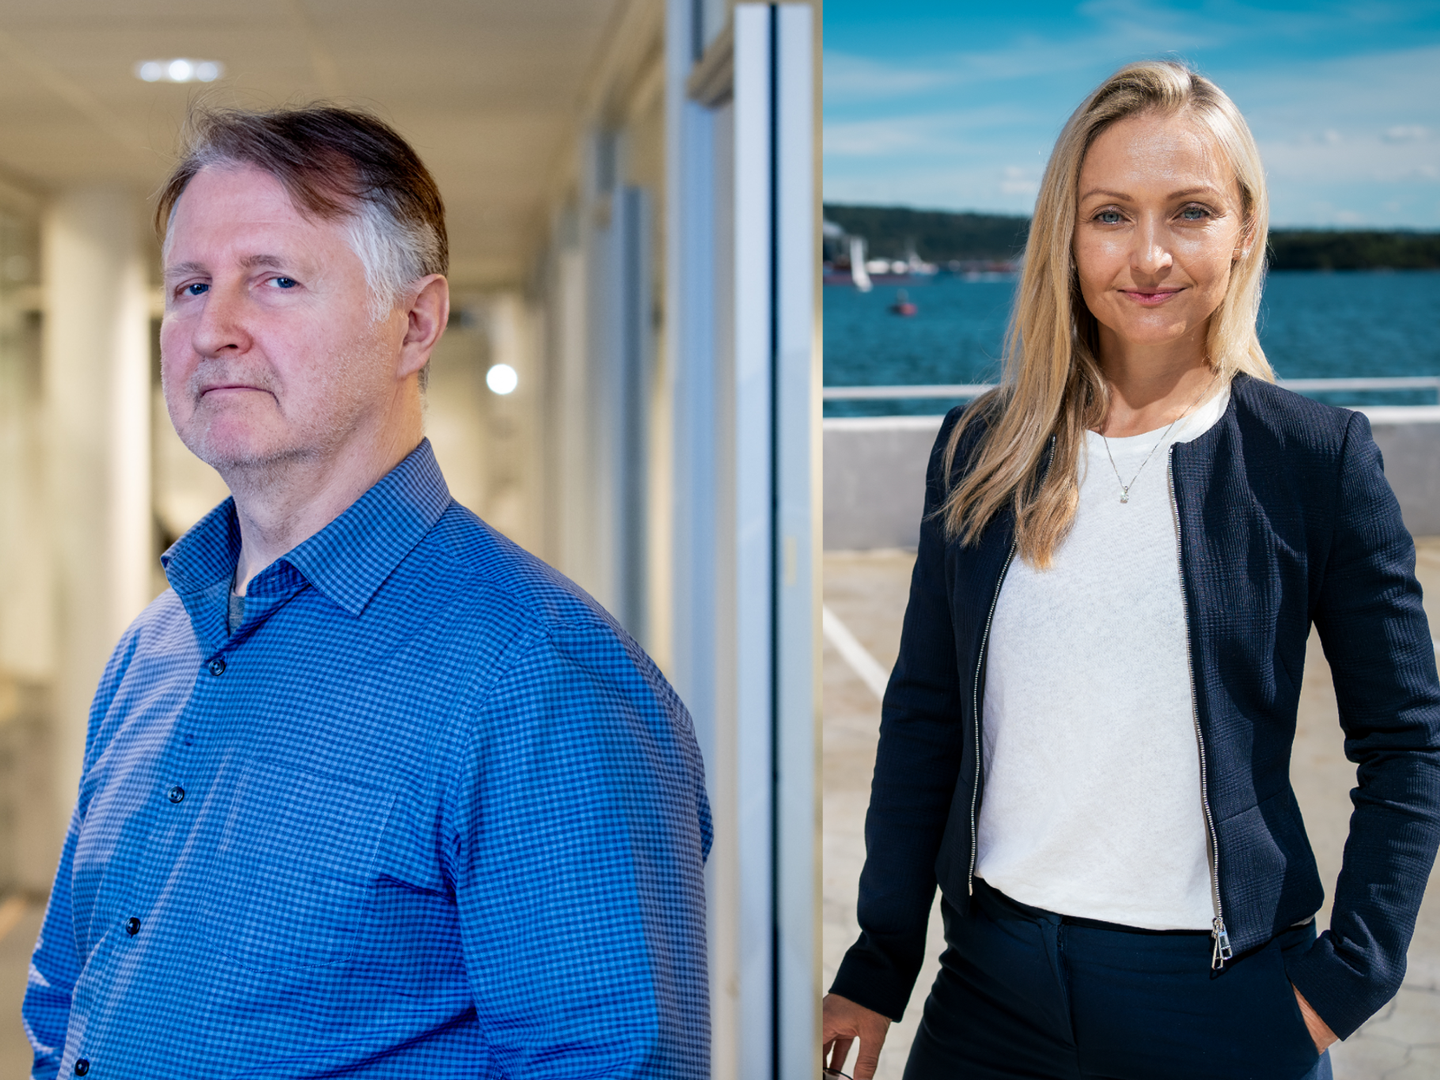 PÅ KOLLISJONSKURS: Både Roy Larsen og Ingrid Teigland Akay ønsker rollen som styreleder i Oncoinvent. | Foto: Vidar Sandnes/Hadean Ventures